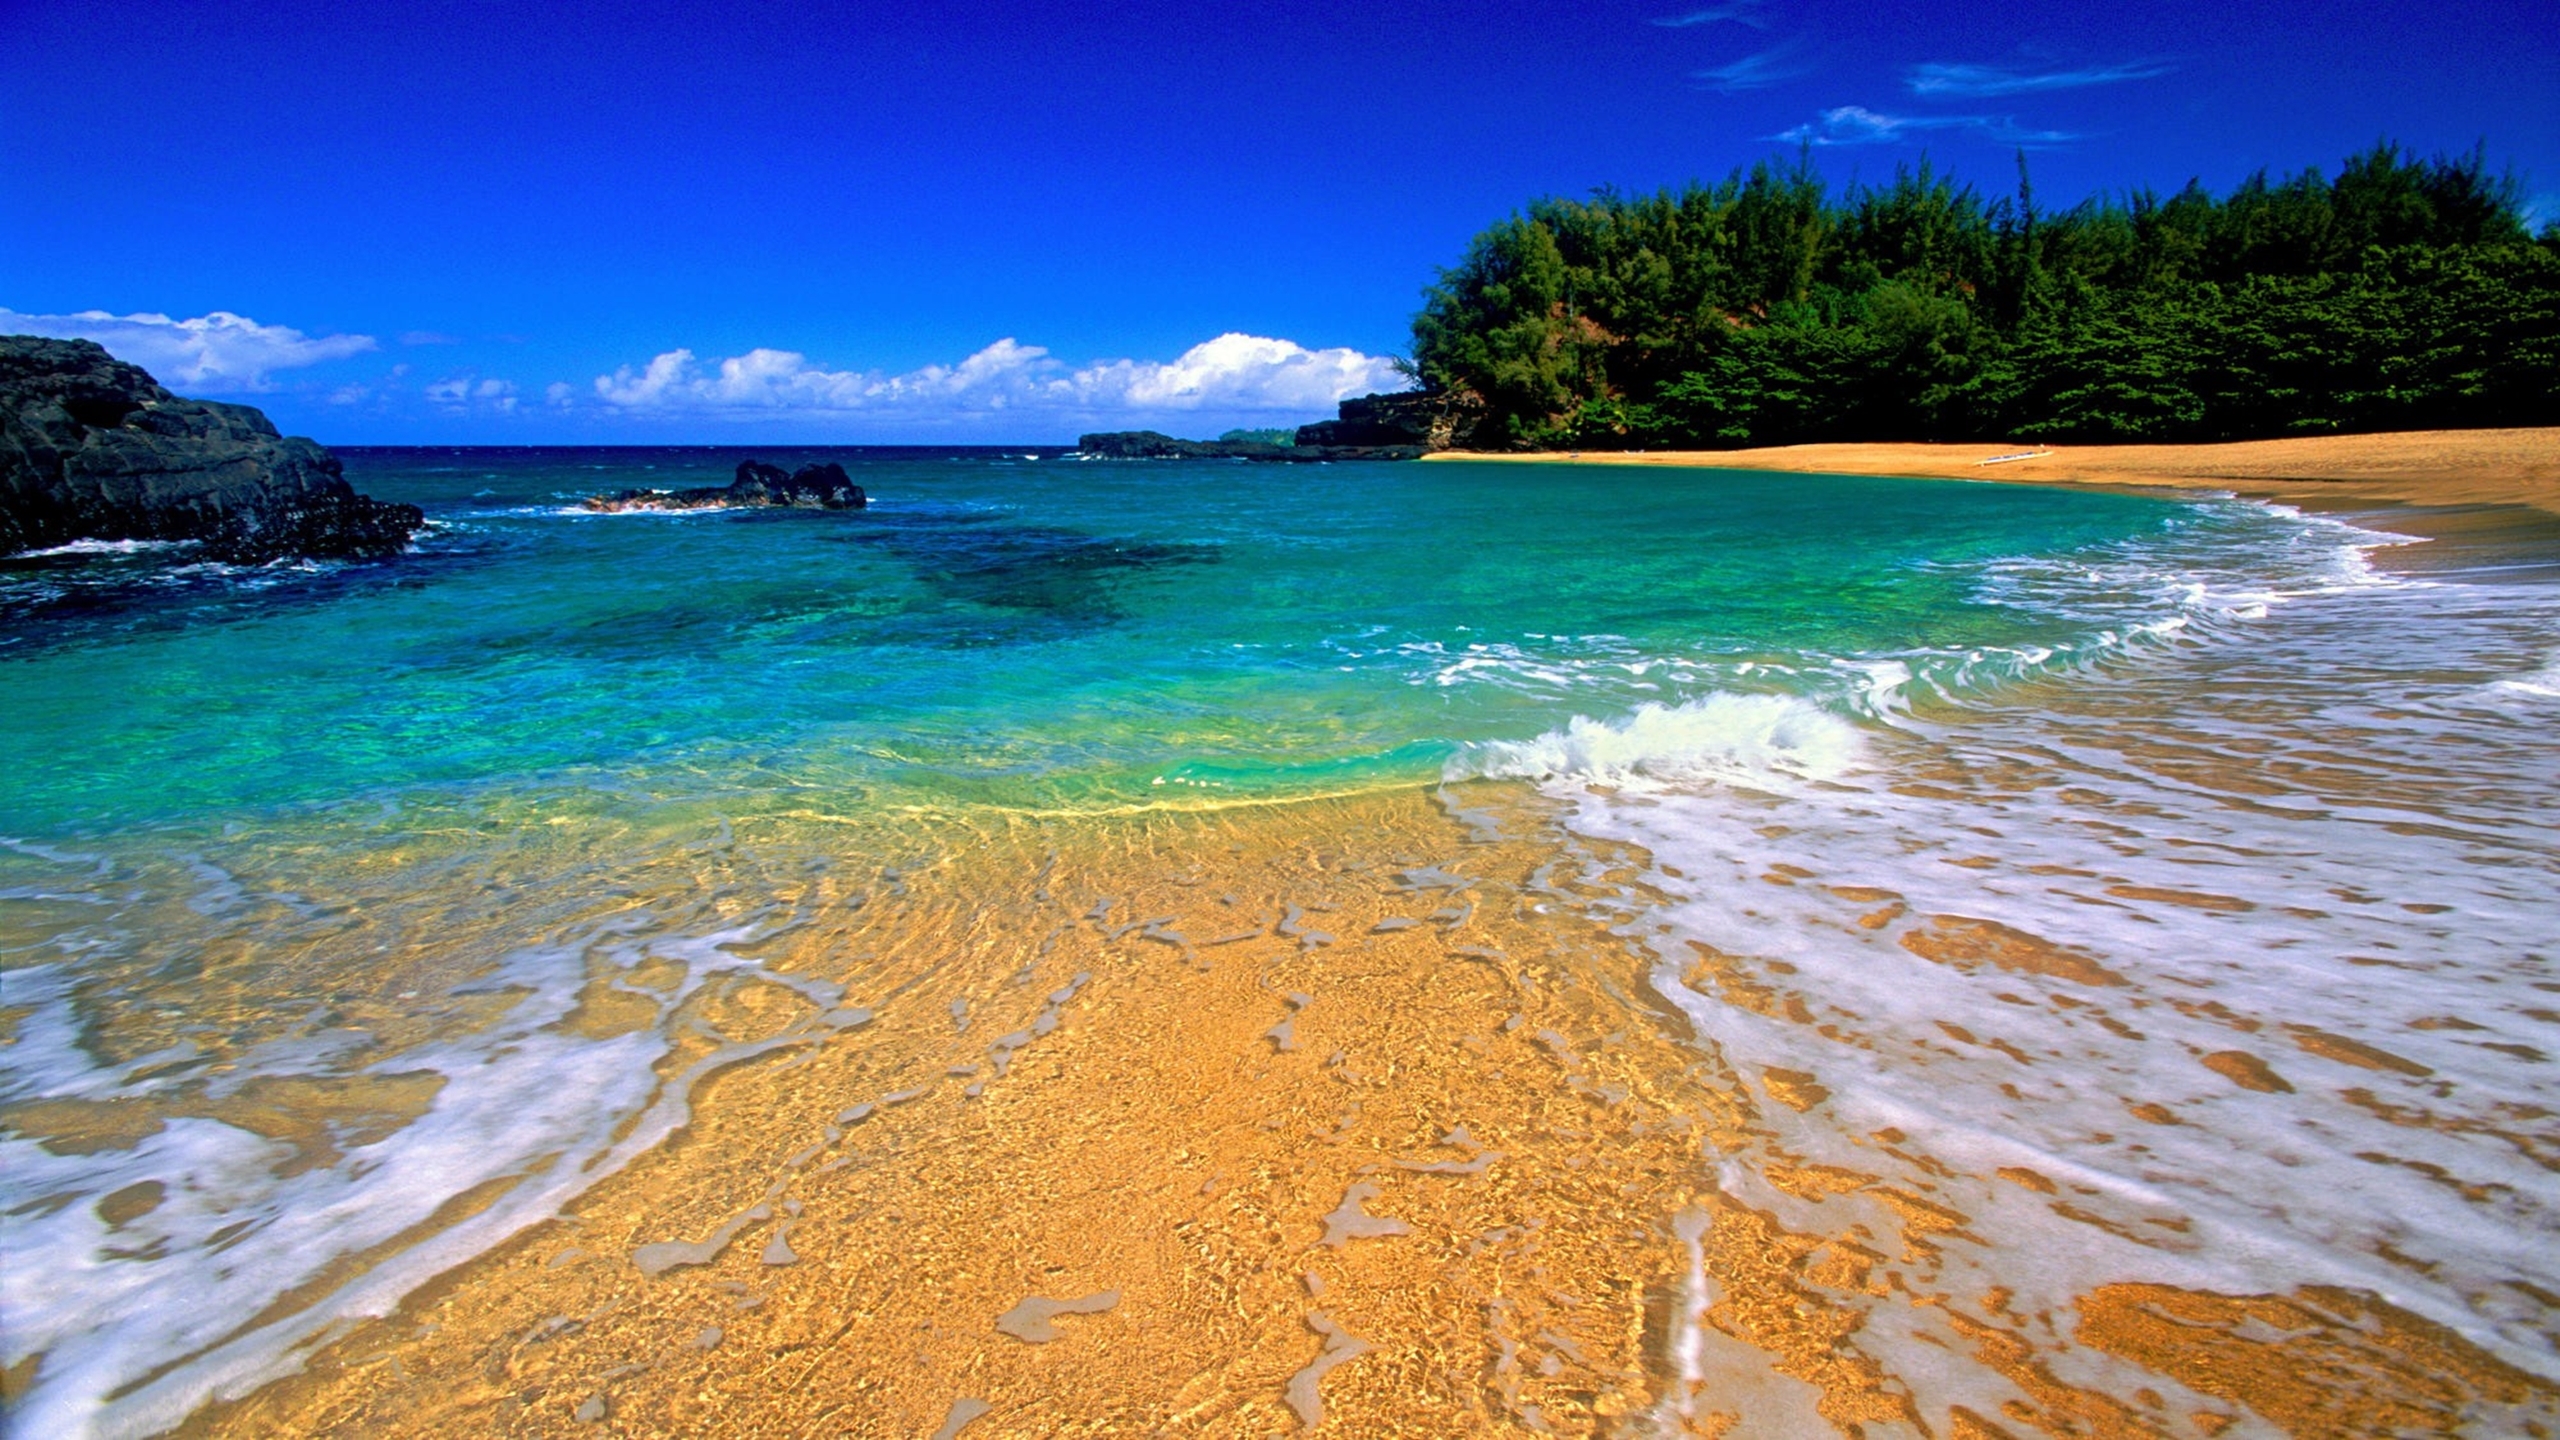 Lumahai-beach-kauai-hawaii-324-1dhk3k6.jpg